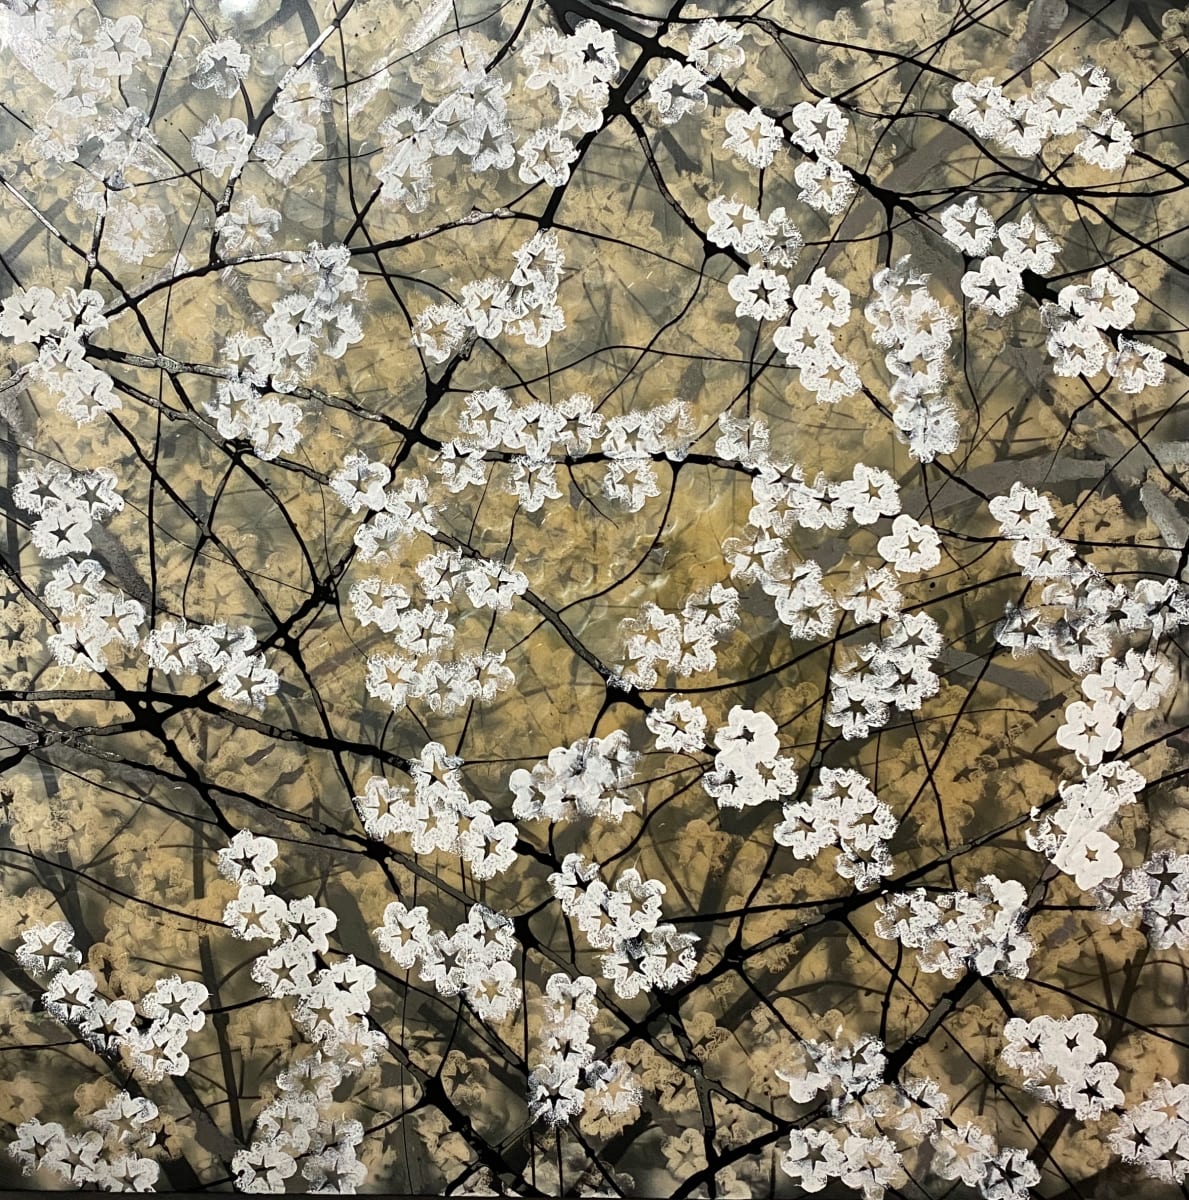 1) Cherry bloom by Robin Eckardt 